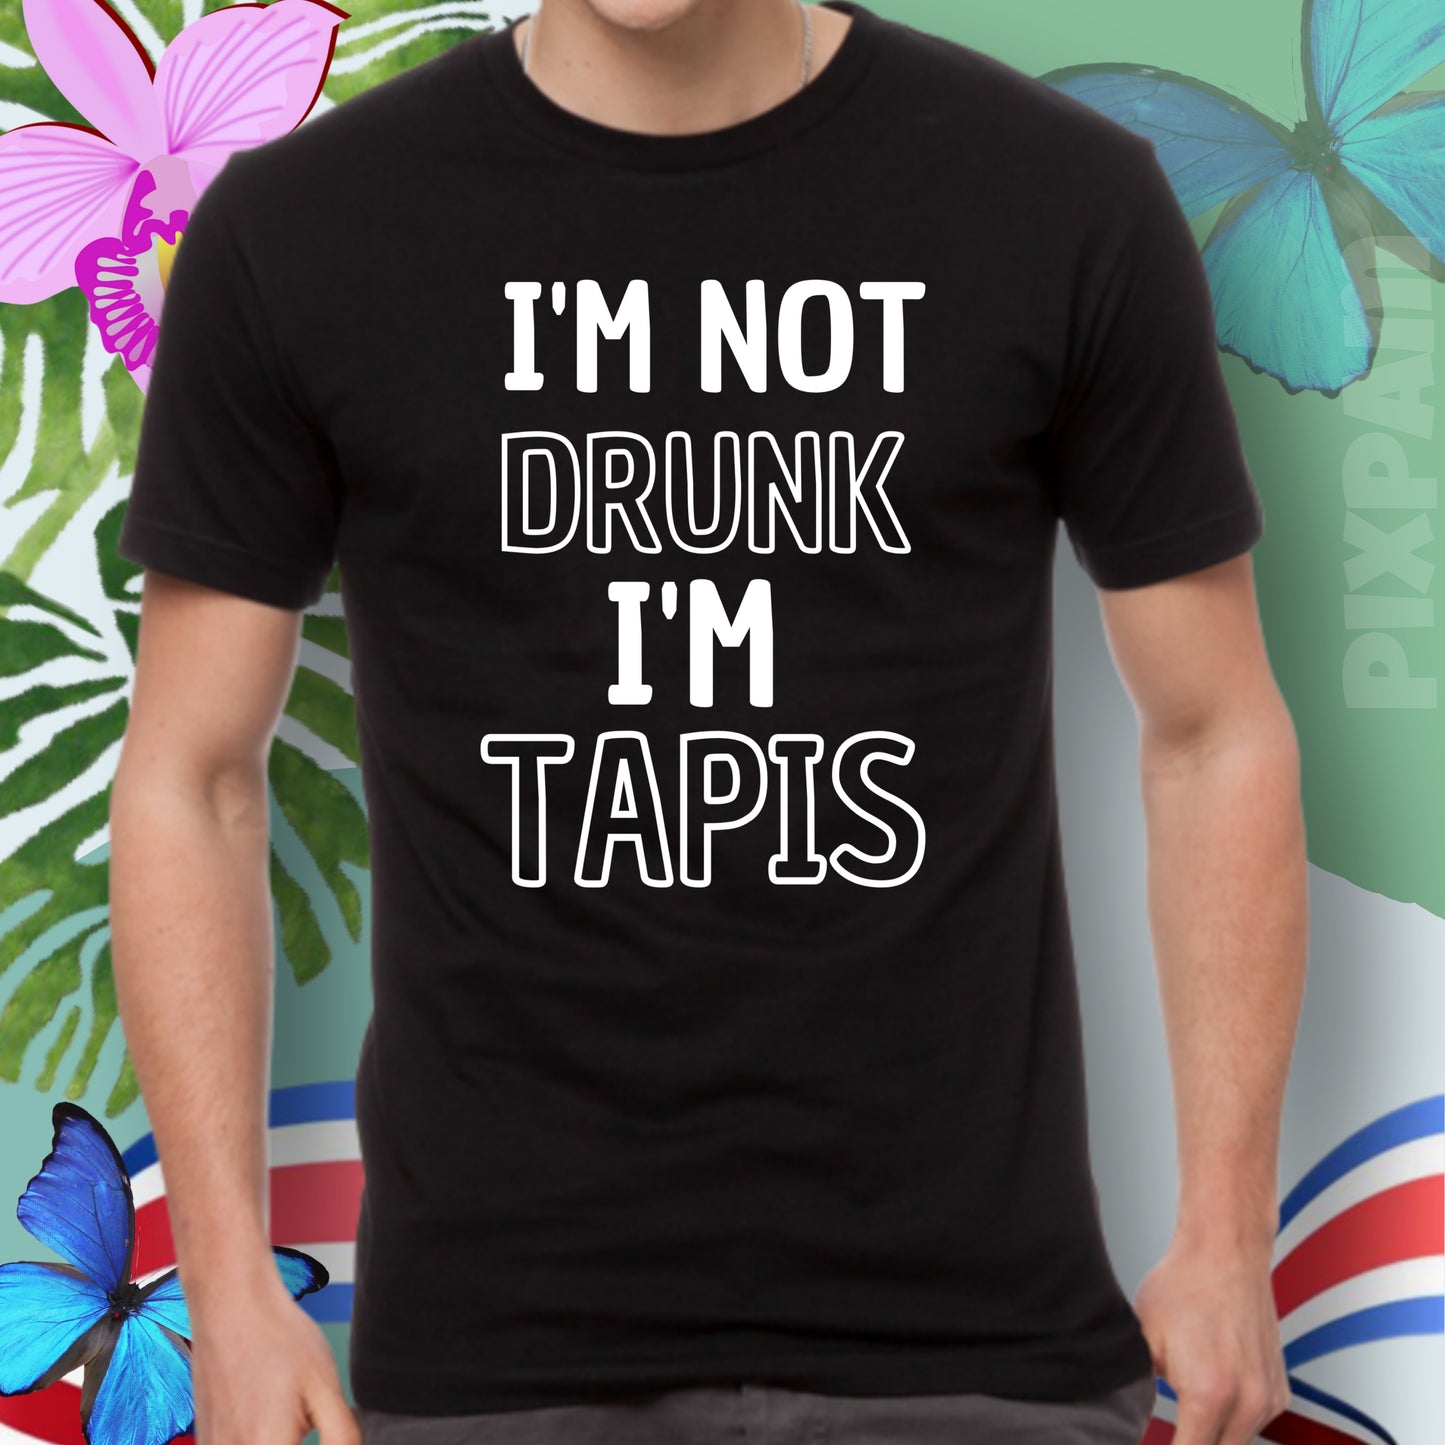 Costa Rica t shirt- "I'm not drunk, I'm tapis"